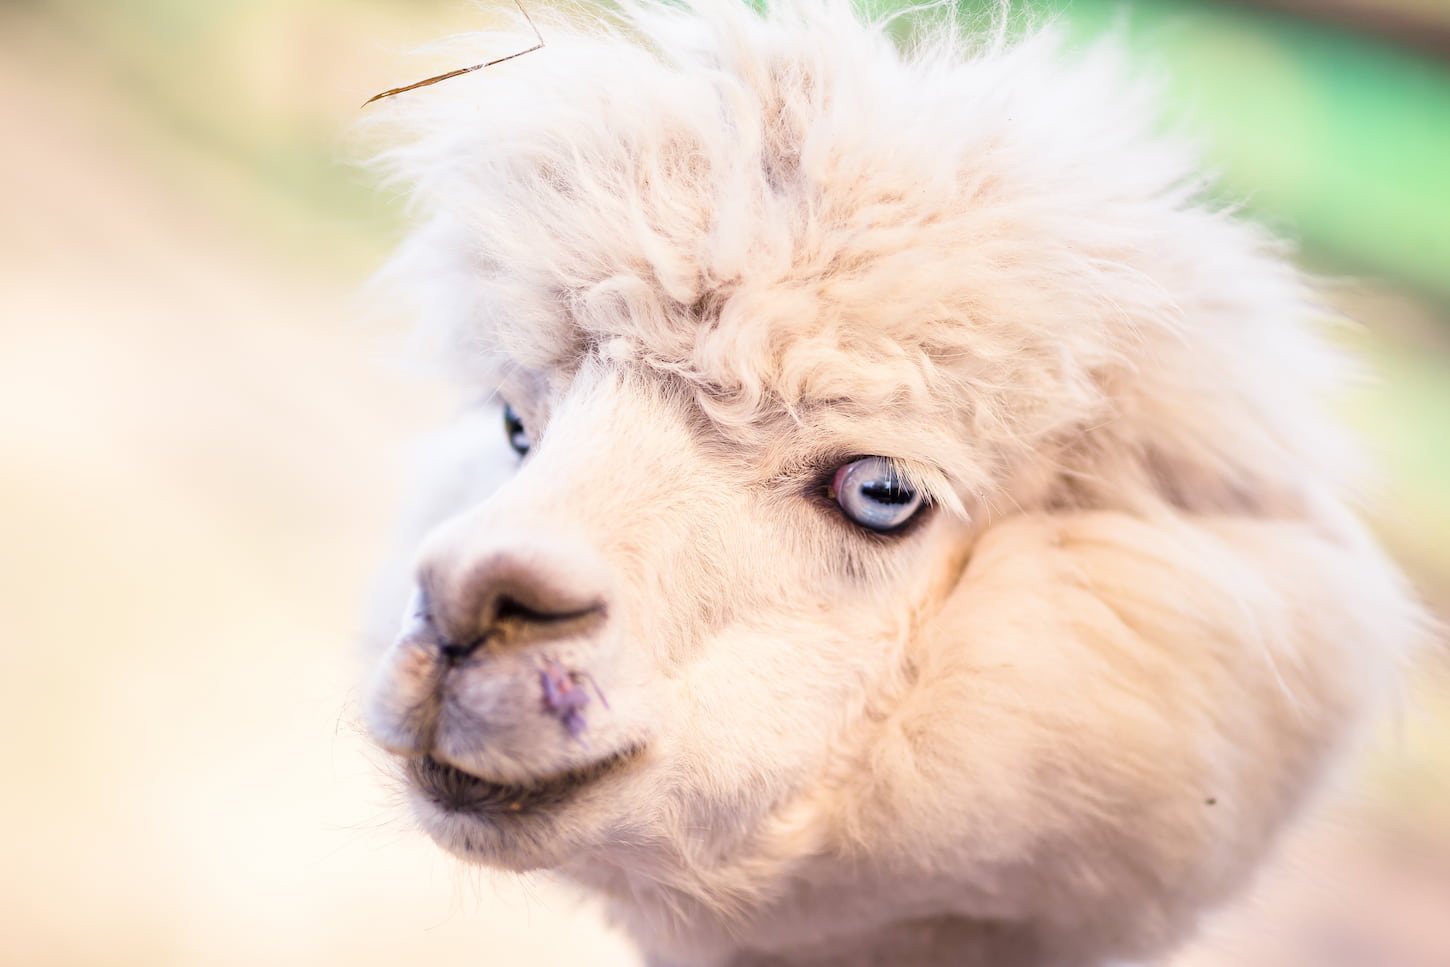 An image of a white cute llama-alpaca with blue eyes